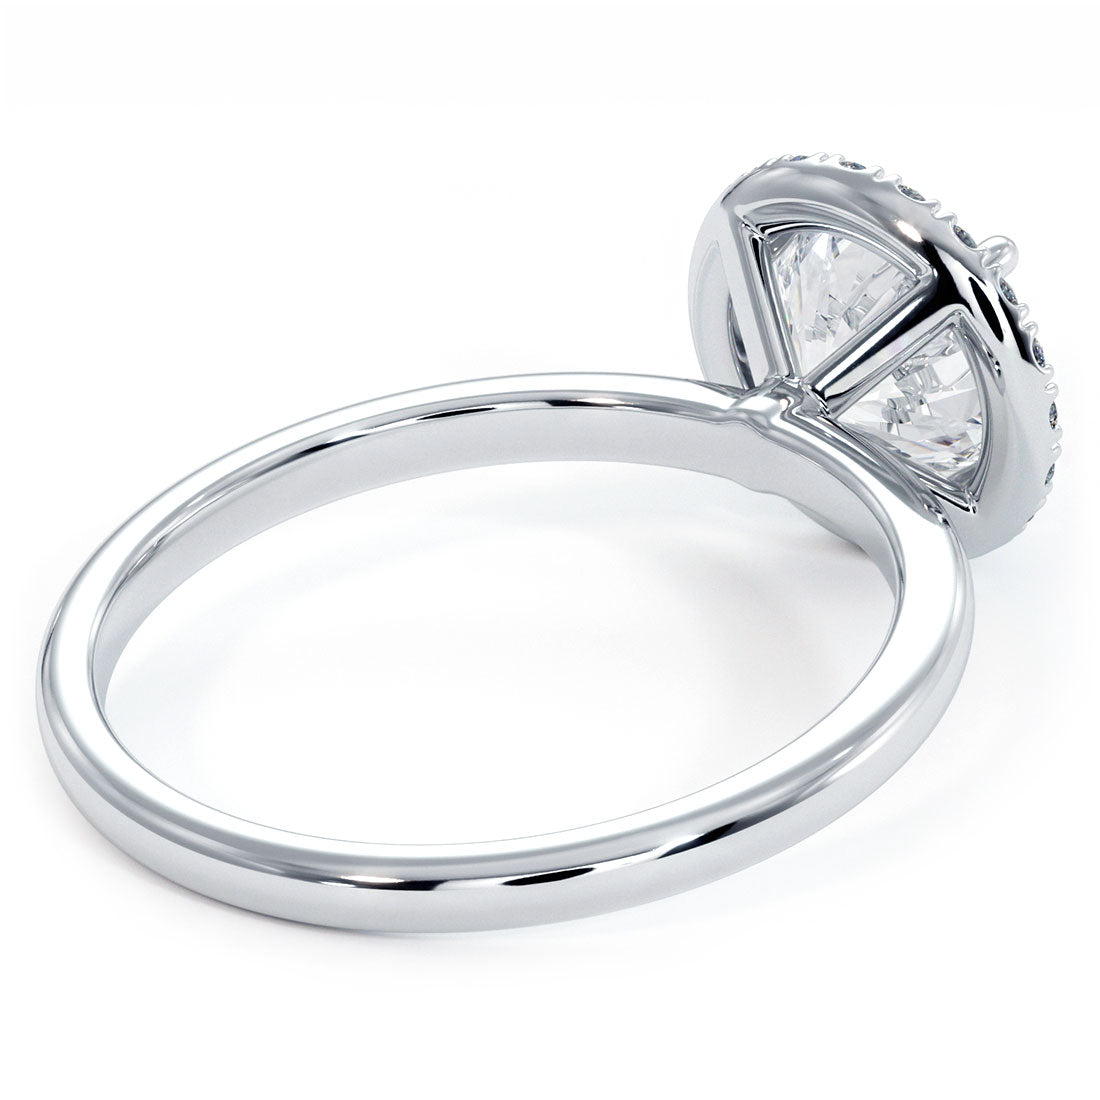 Round Halo Petite Micropavé Plain Gold Shank Diamond Engagement Ring Setting